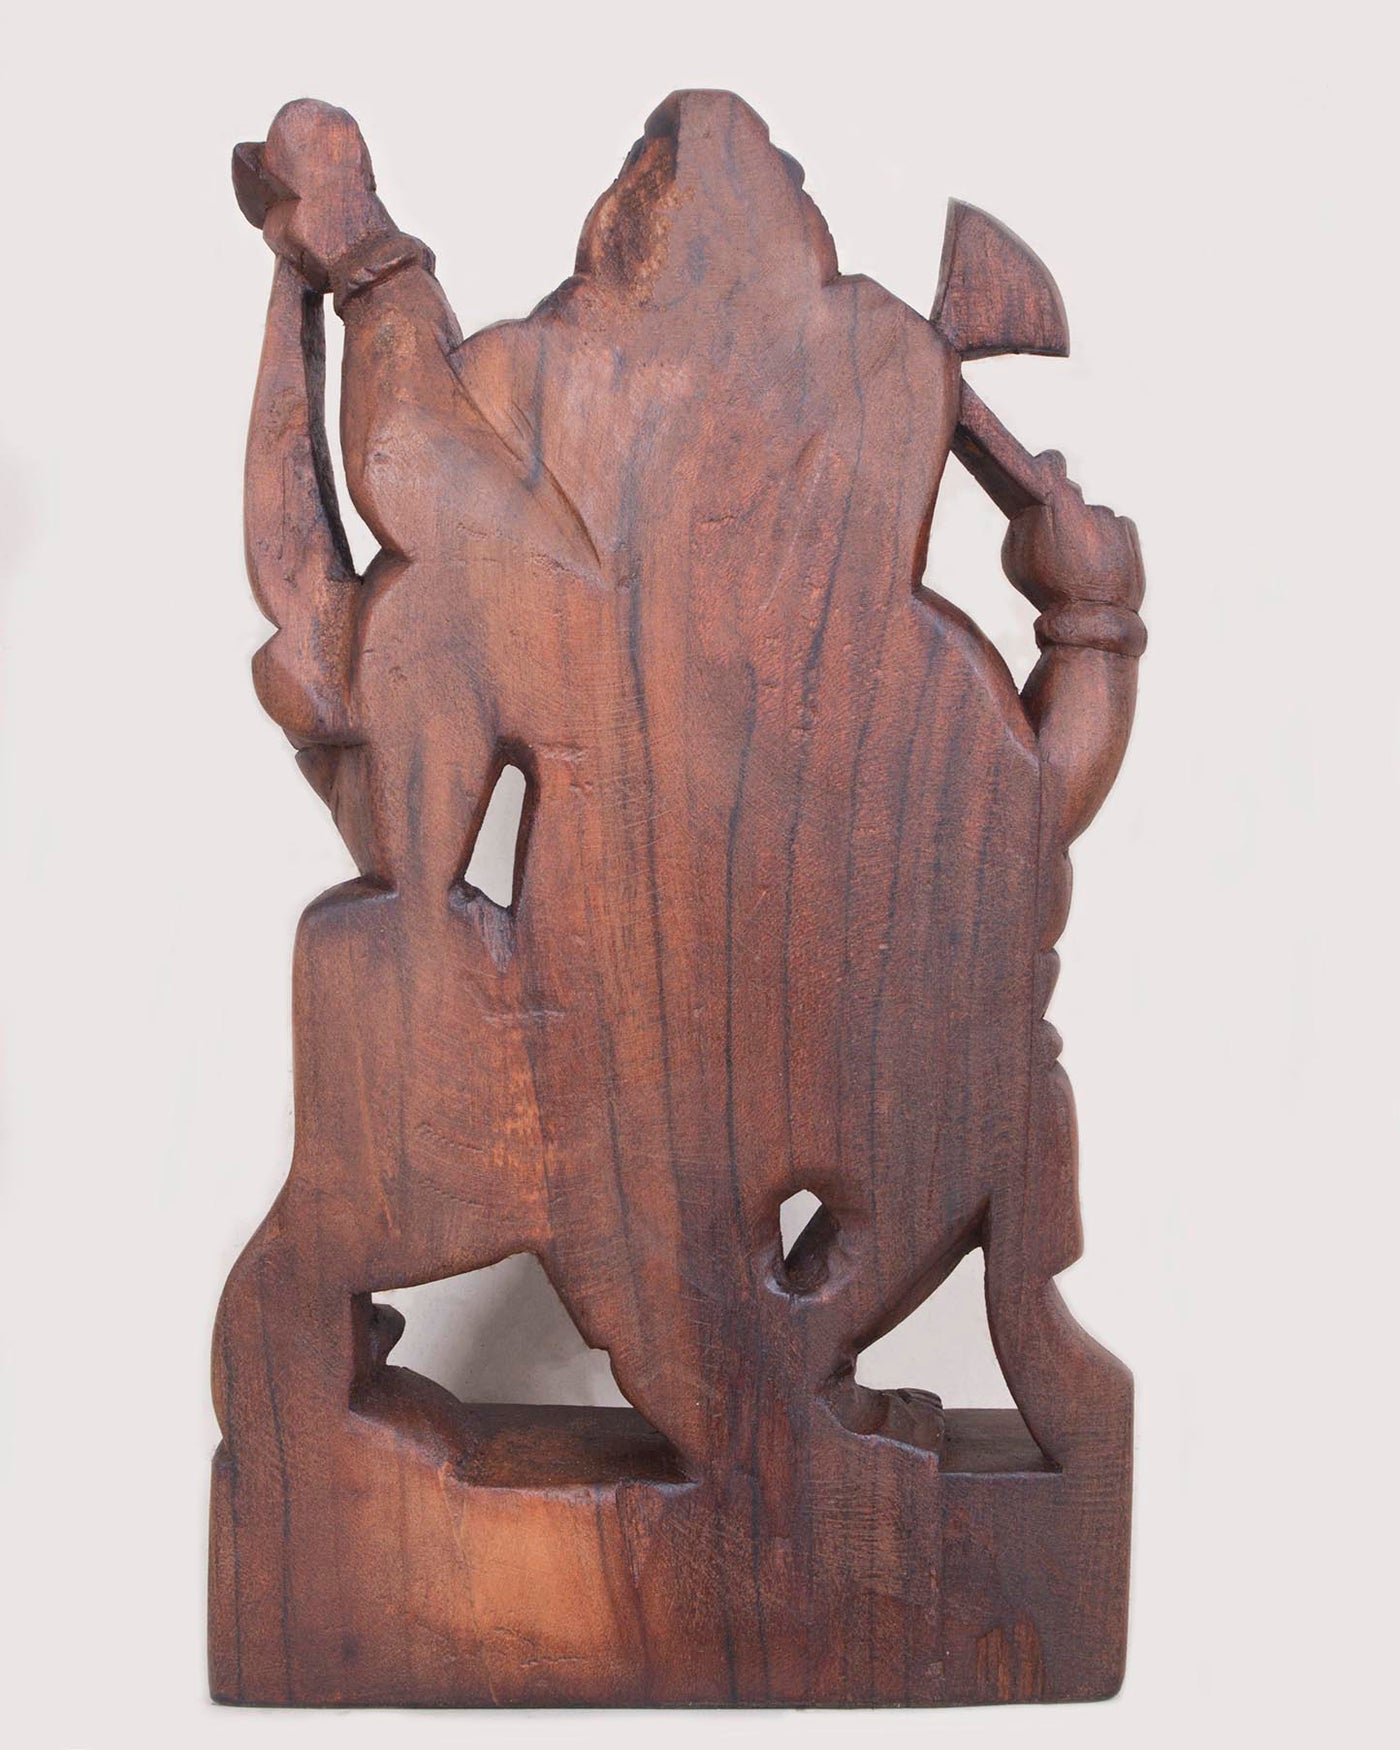 Holding Axe,Ankusha,Ladoo Ganesh Wooden Sculpture 14"